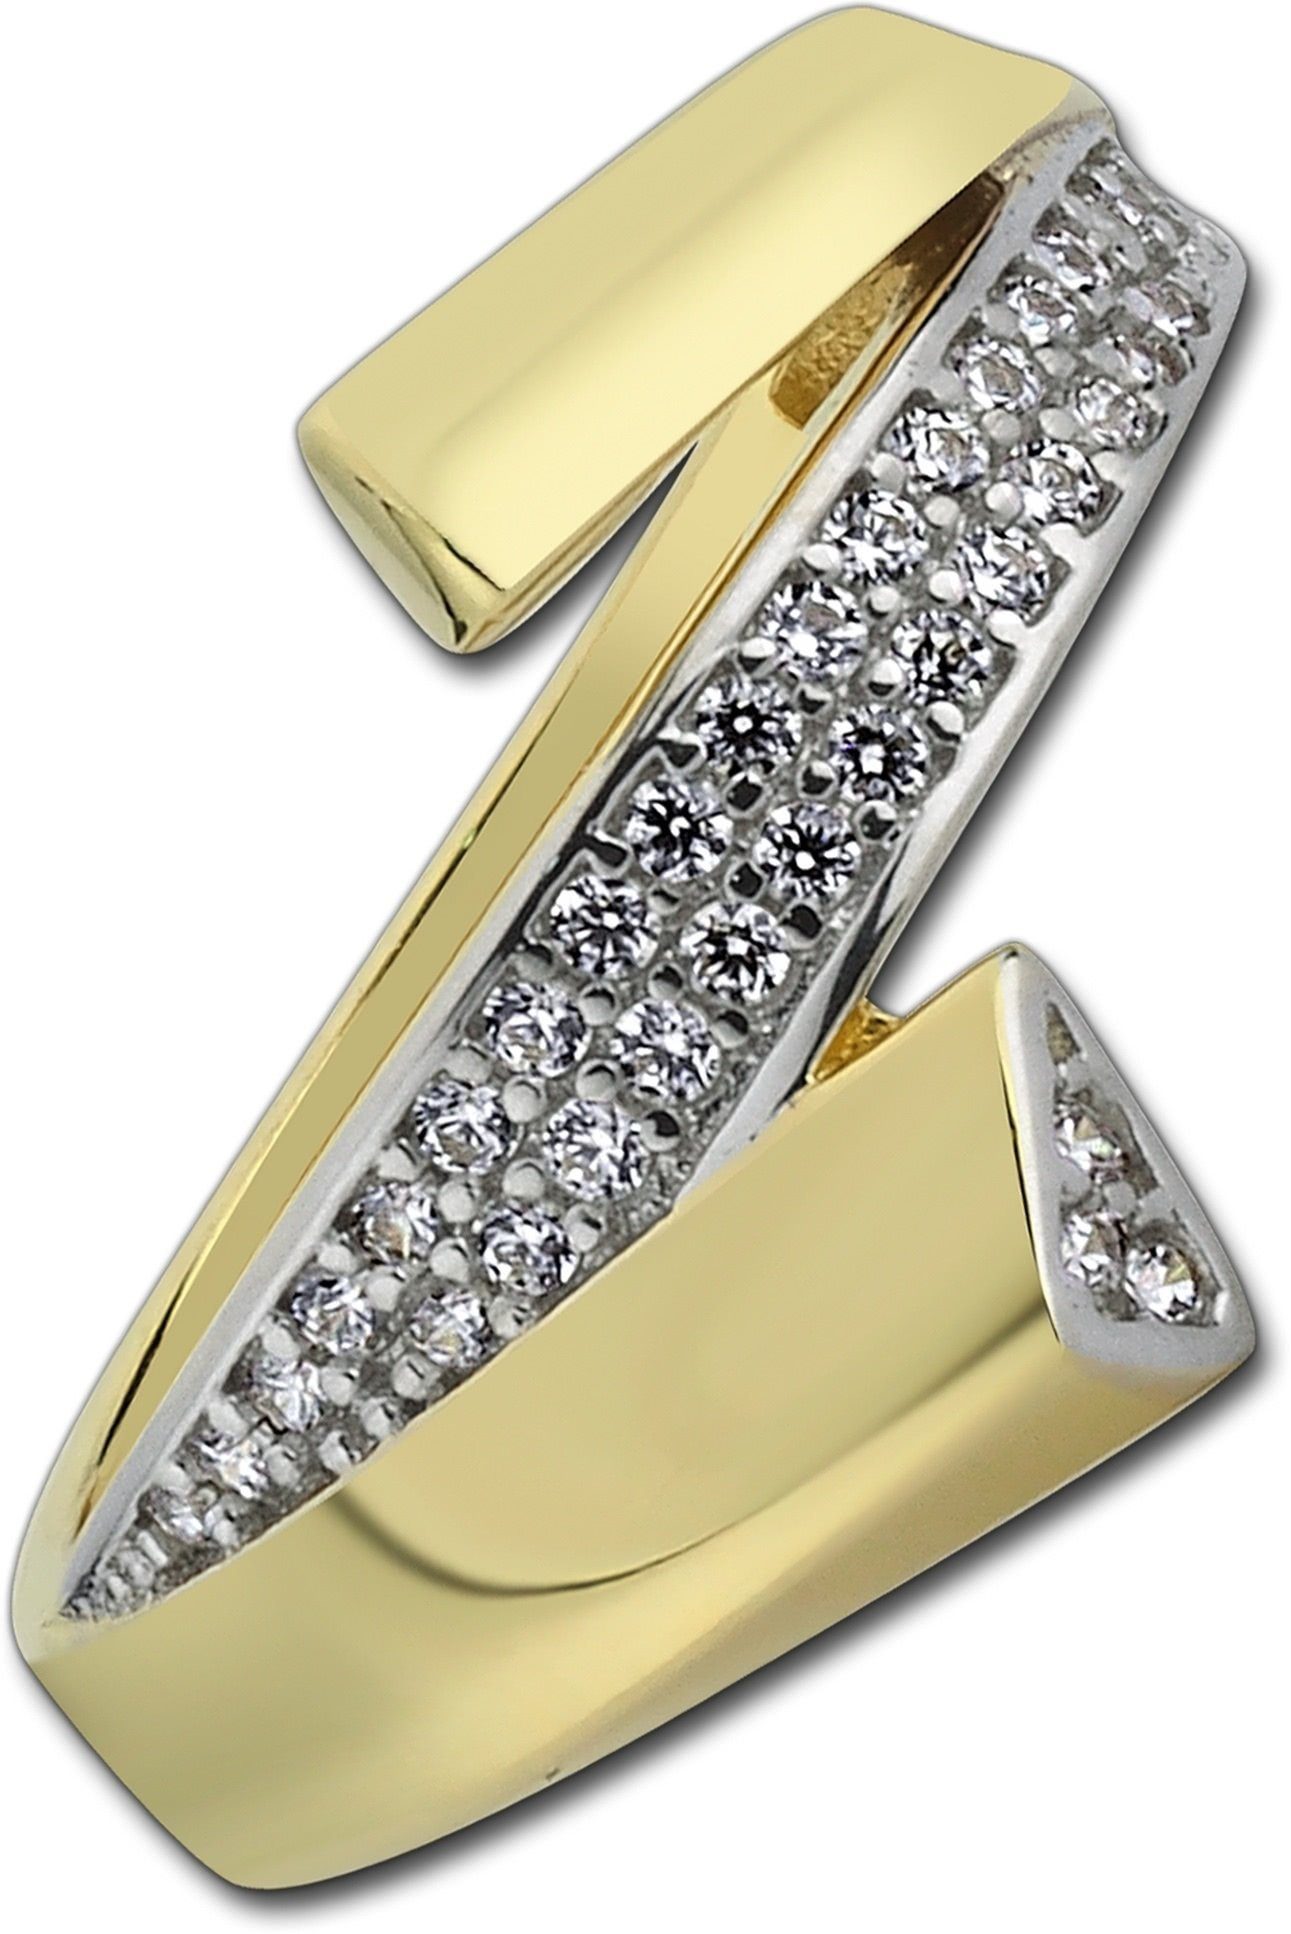 Balia Goldring Balia Damen Ring aus 333 Gelbgold (Fingerring), Fingerring Größe 56 (17,8), 333 Gelbgold - 8 Karat (Glamour gold) Gold